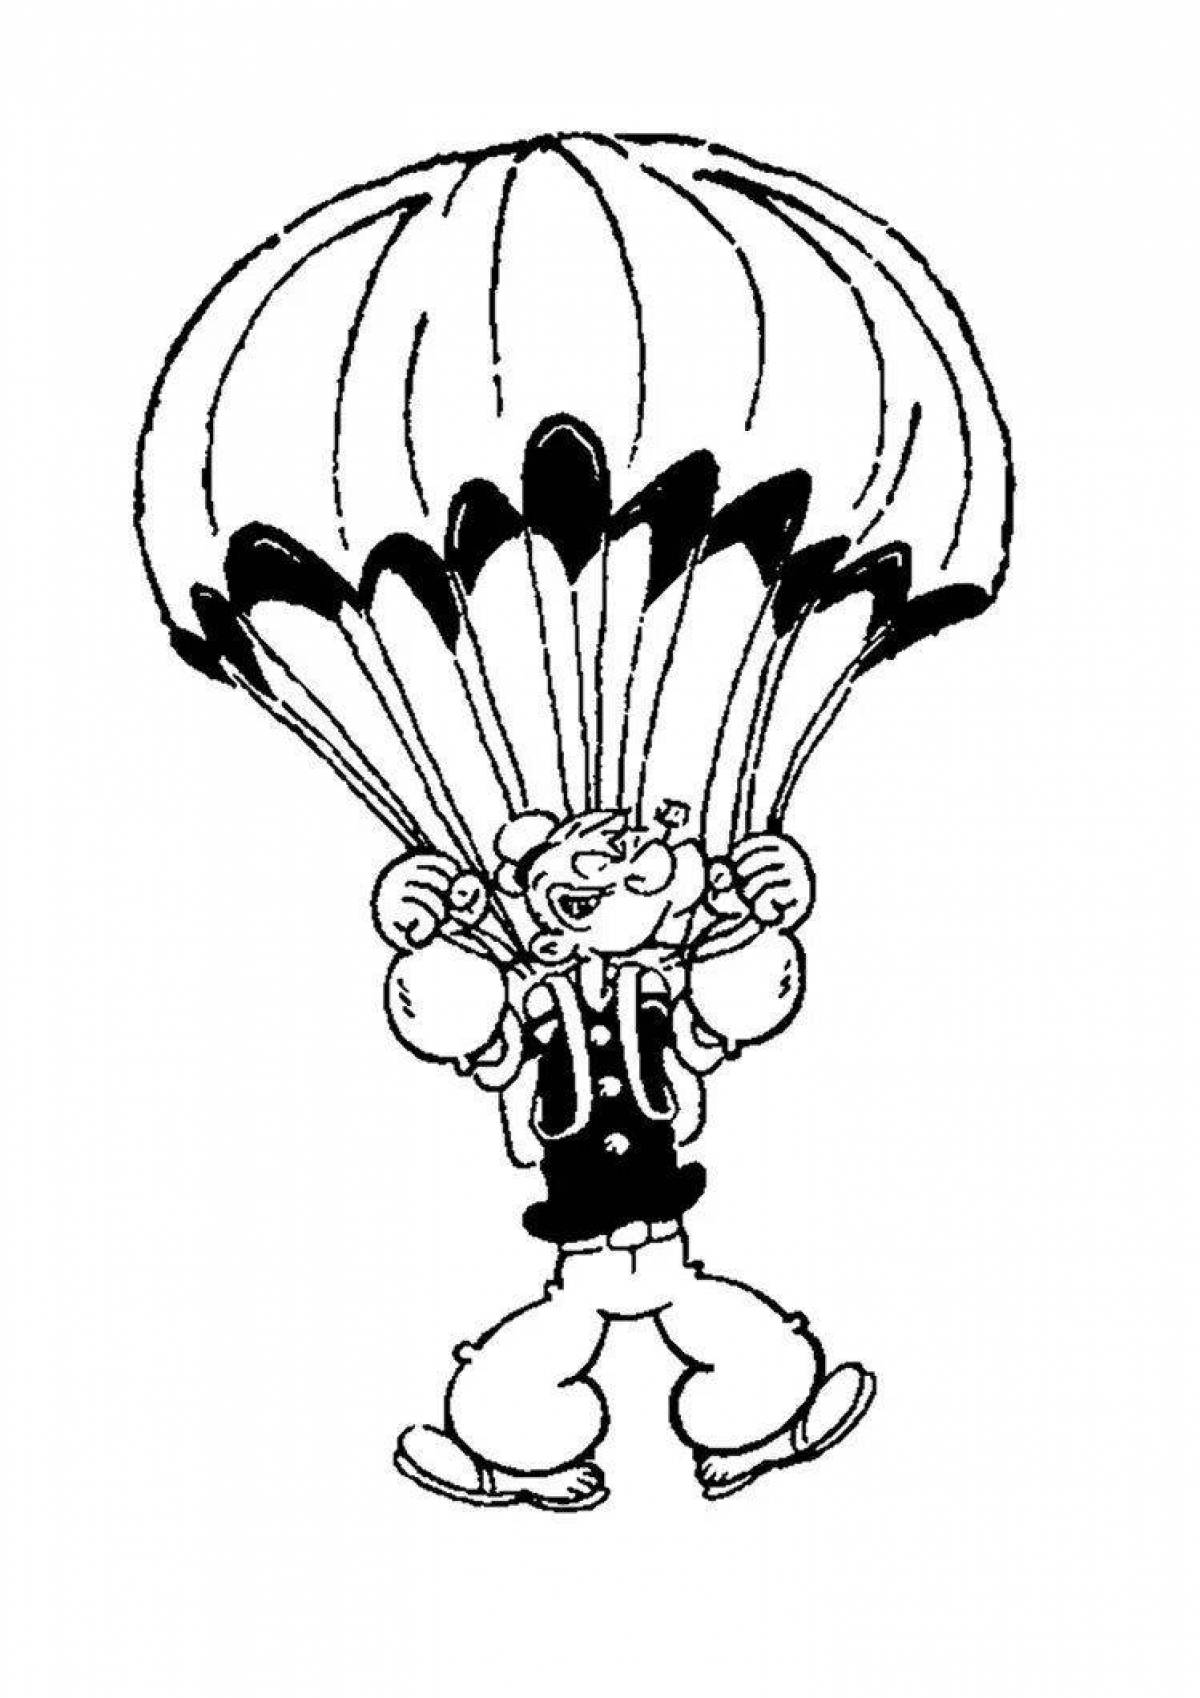 Забавная раскраска с парашютом для малышей